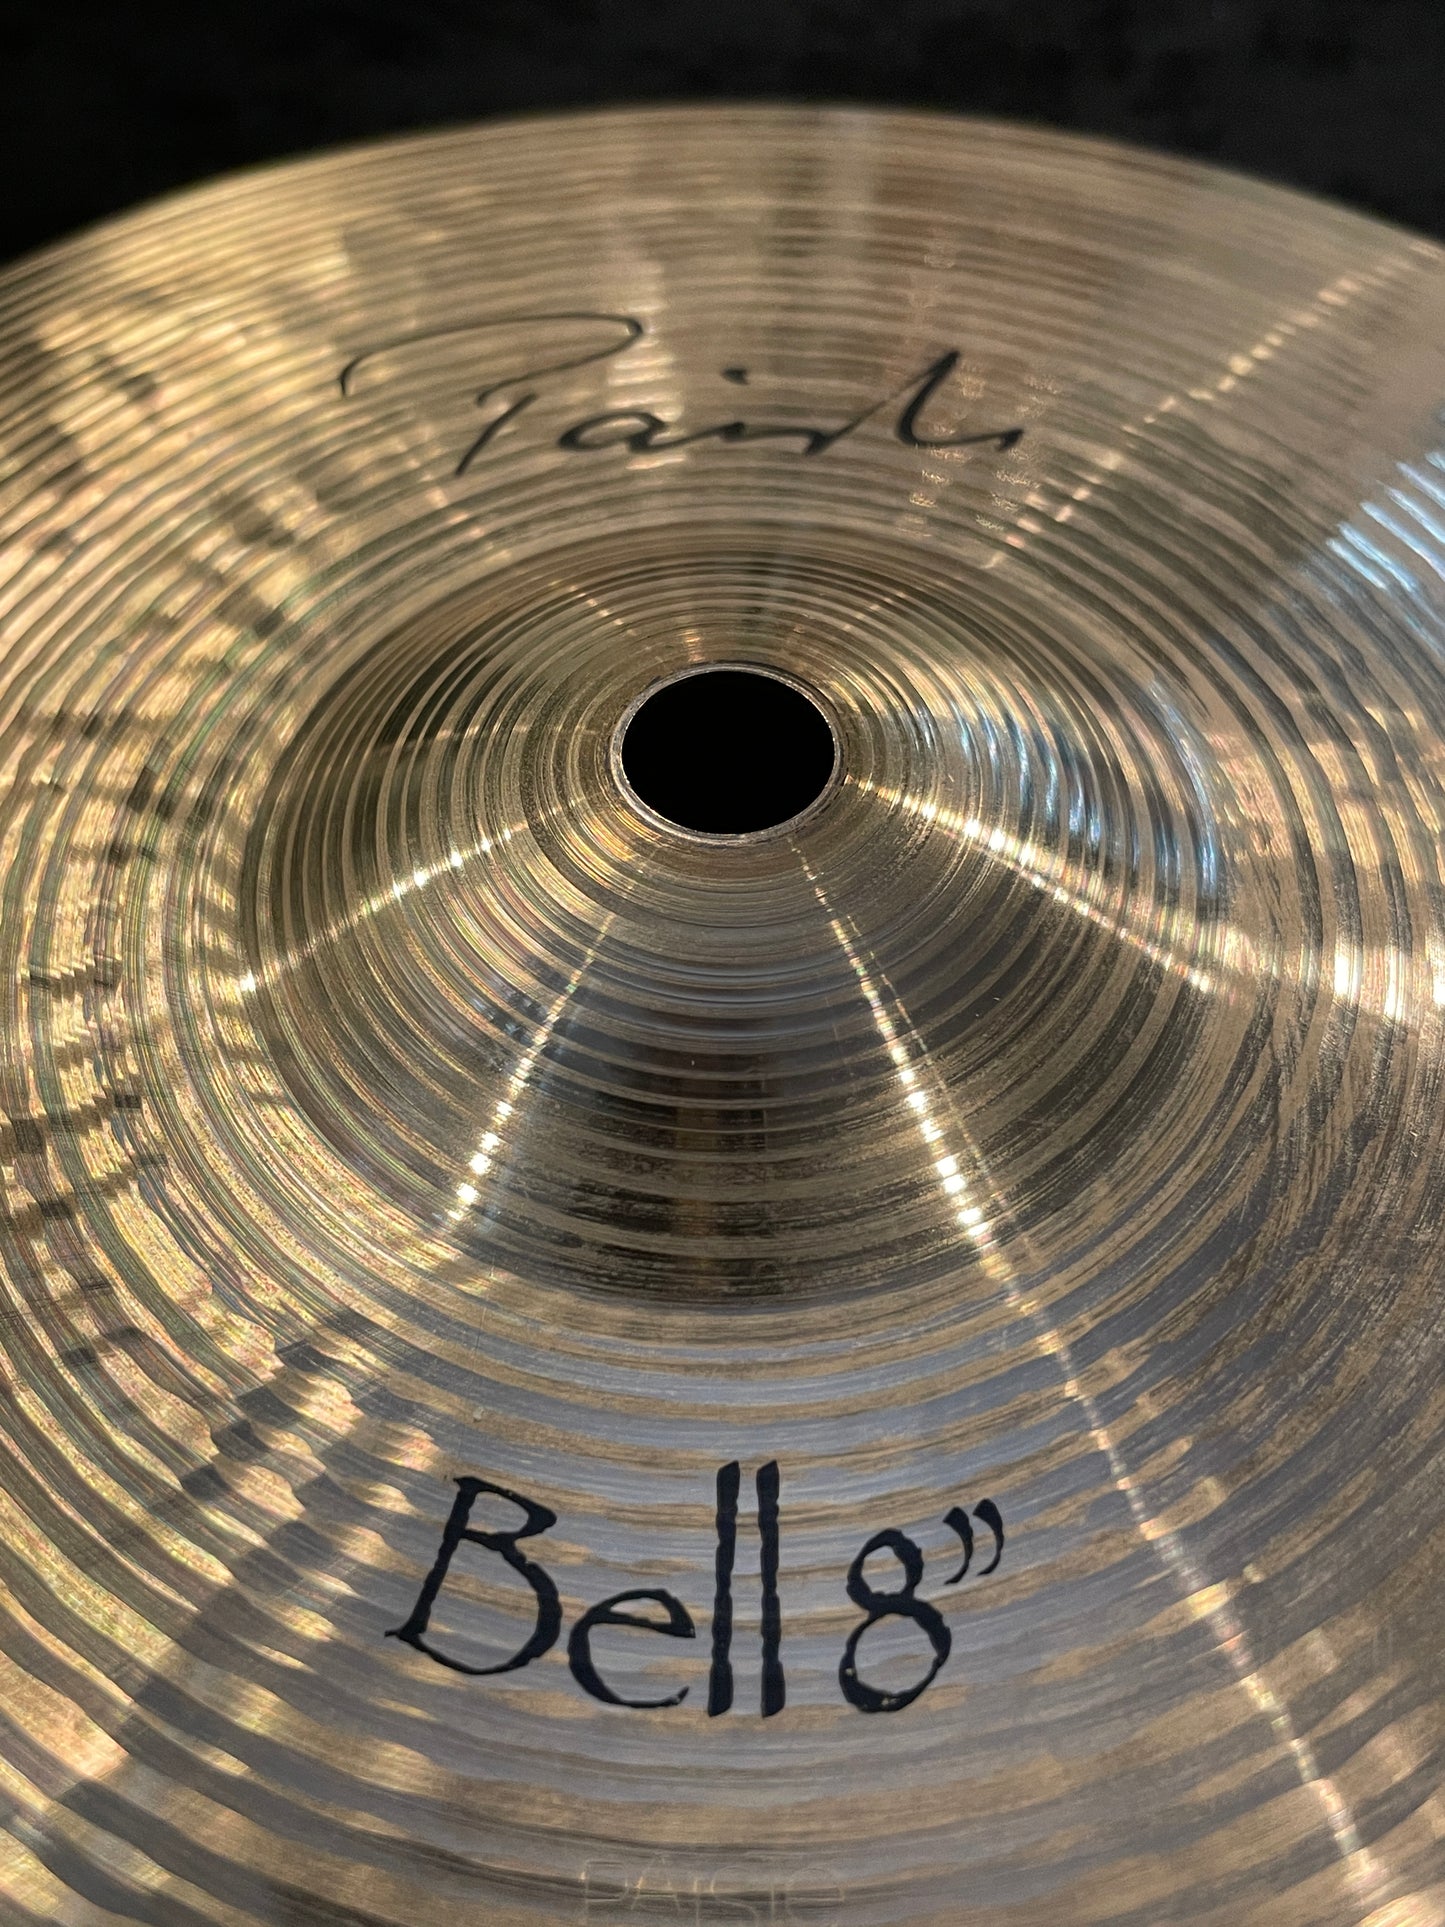 8" Paiste Signature Bell Cymbal 412g